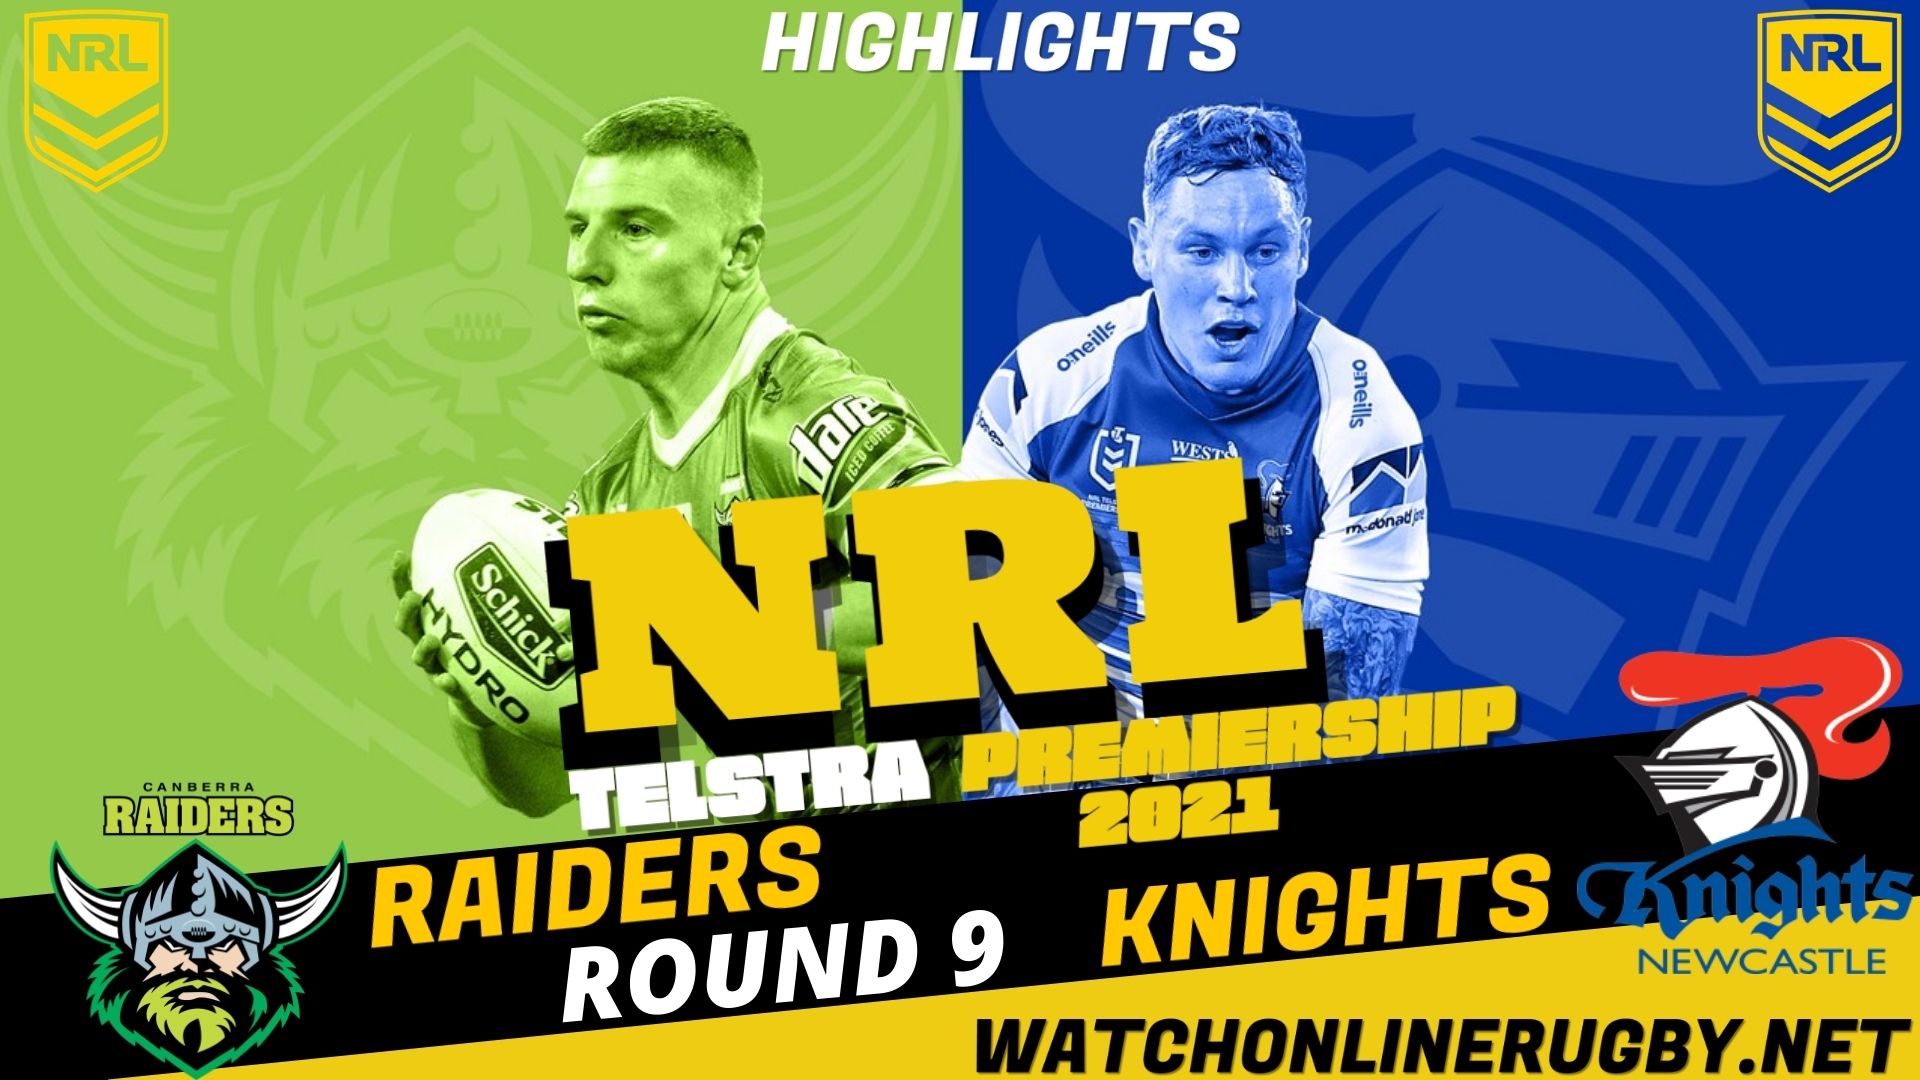 Raiders Vs Knights Highlights RD 9 NRL Rugby